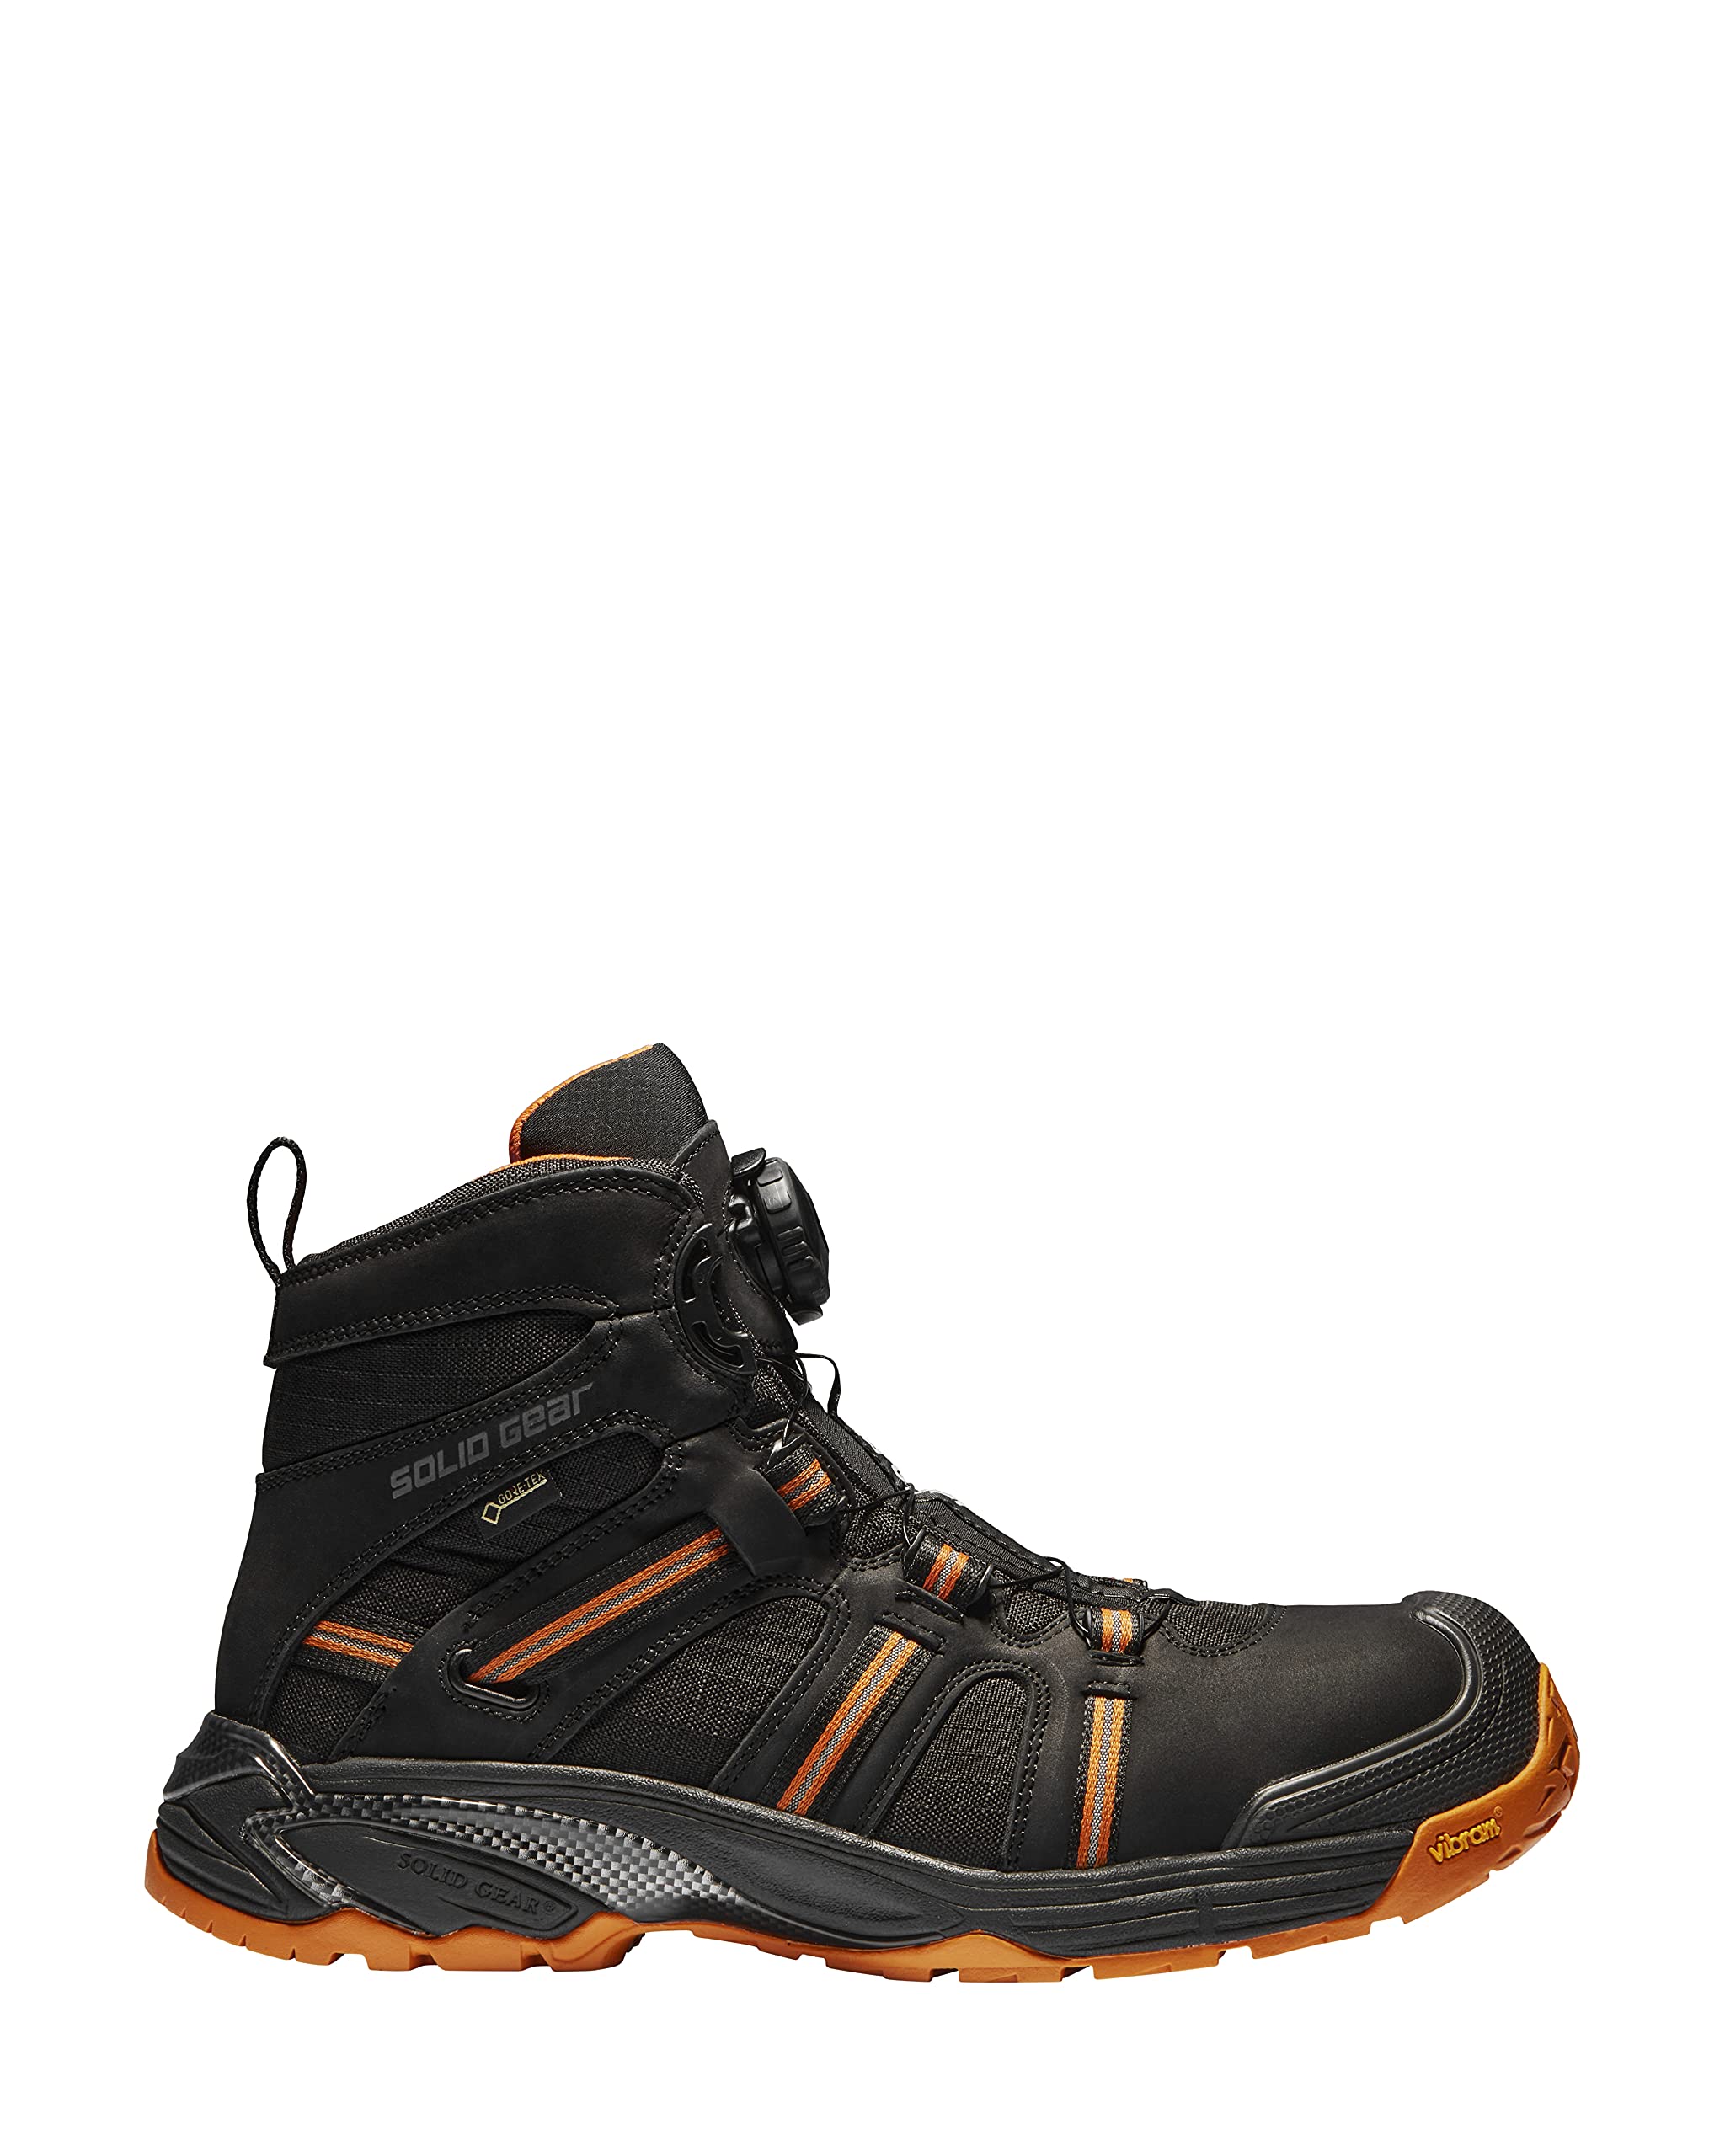 Solid Gear SGUS80007 Phoenix GTX BOA® Safety Shoe, Size 11